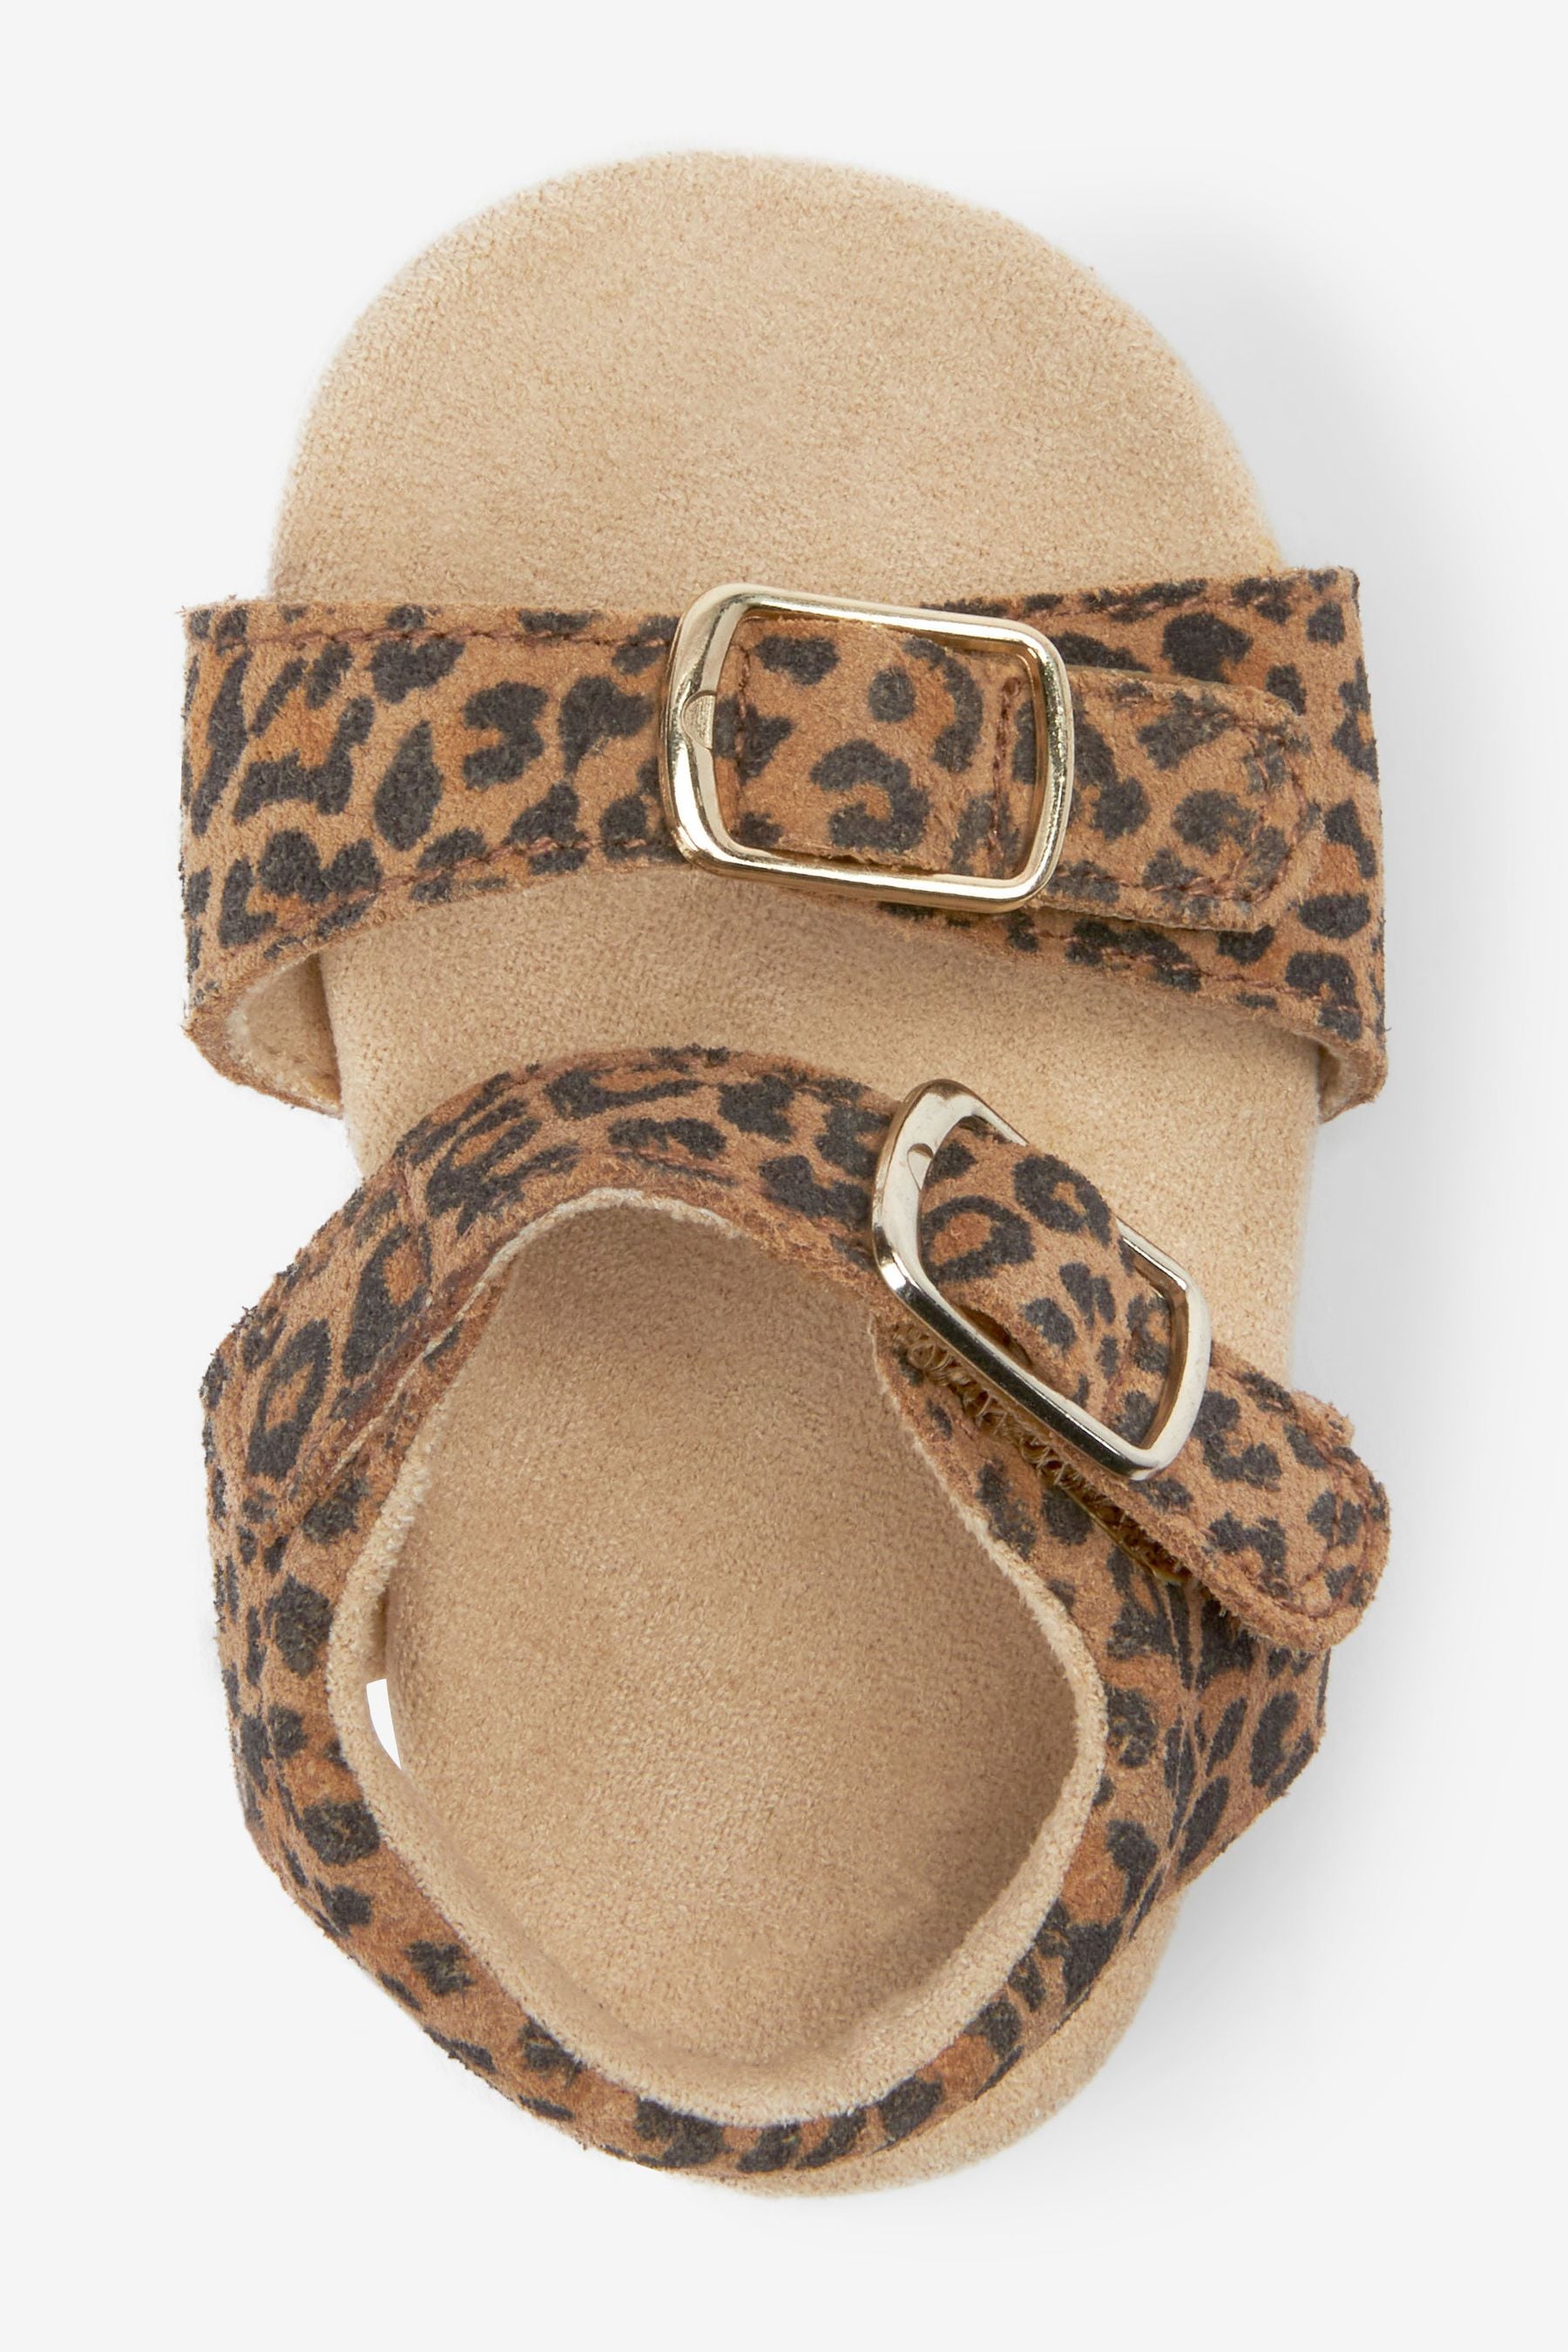 Tan Brown Animal Print Adjustable Baby Sandals (3-18mths)